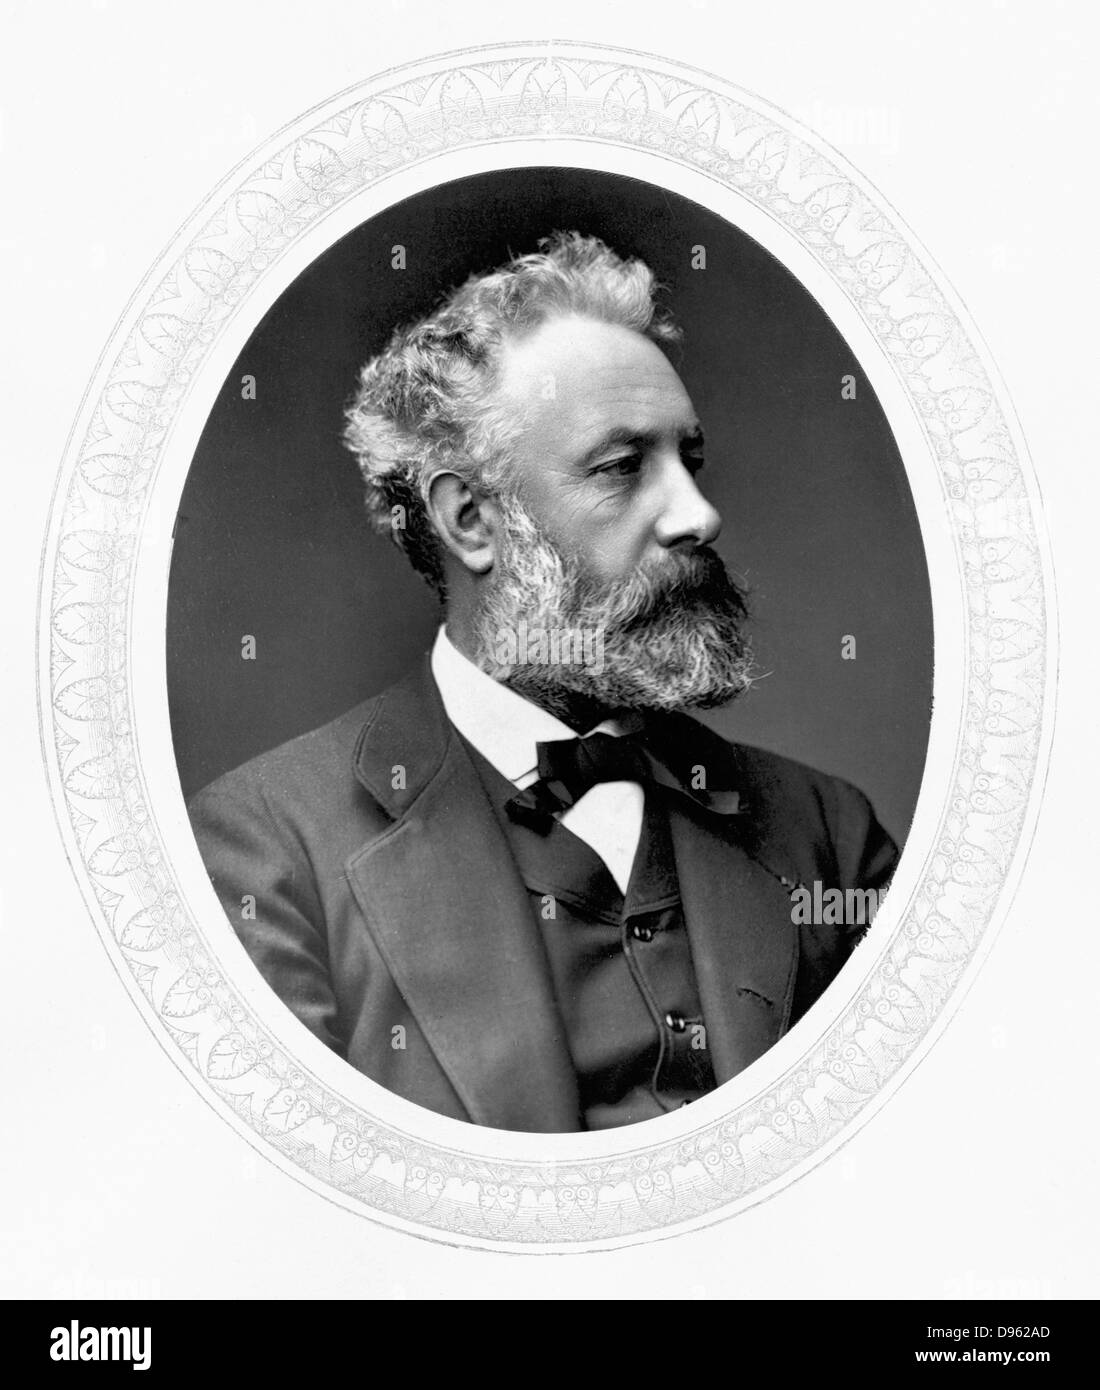 Jules Verne (1828-1905) francese avventura e scrittore di fantascienza. Fotografia pubblicata a Londra c1880. Woodburytype. Foto Stock